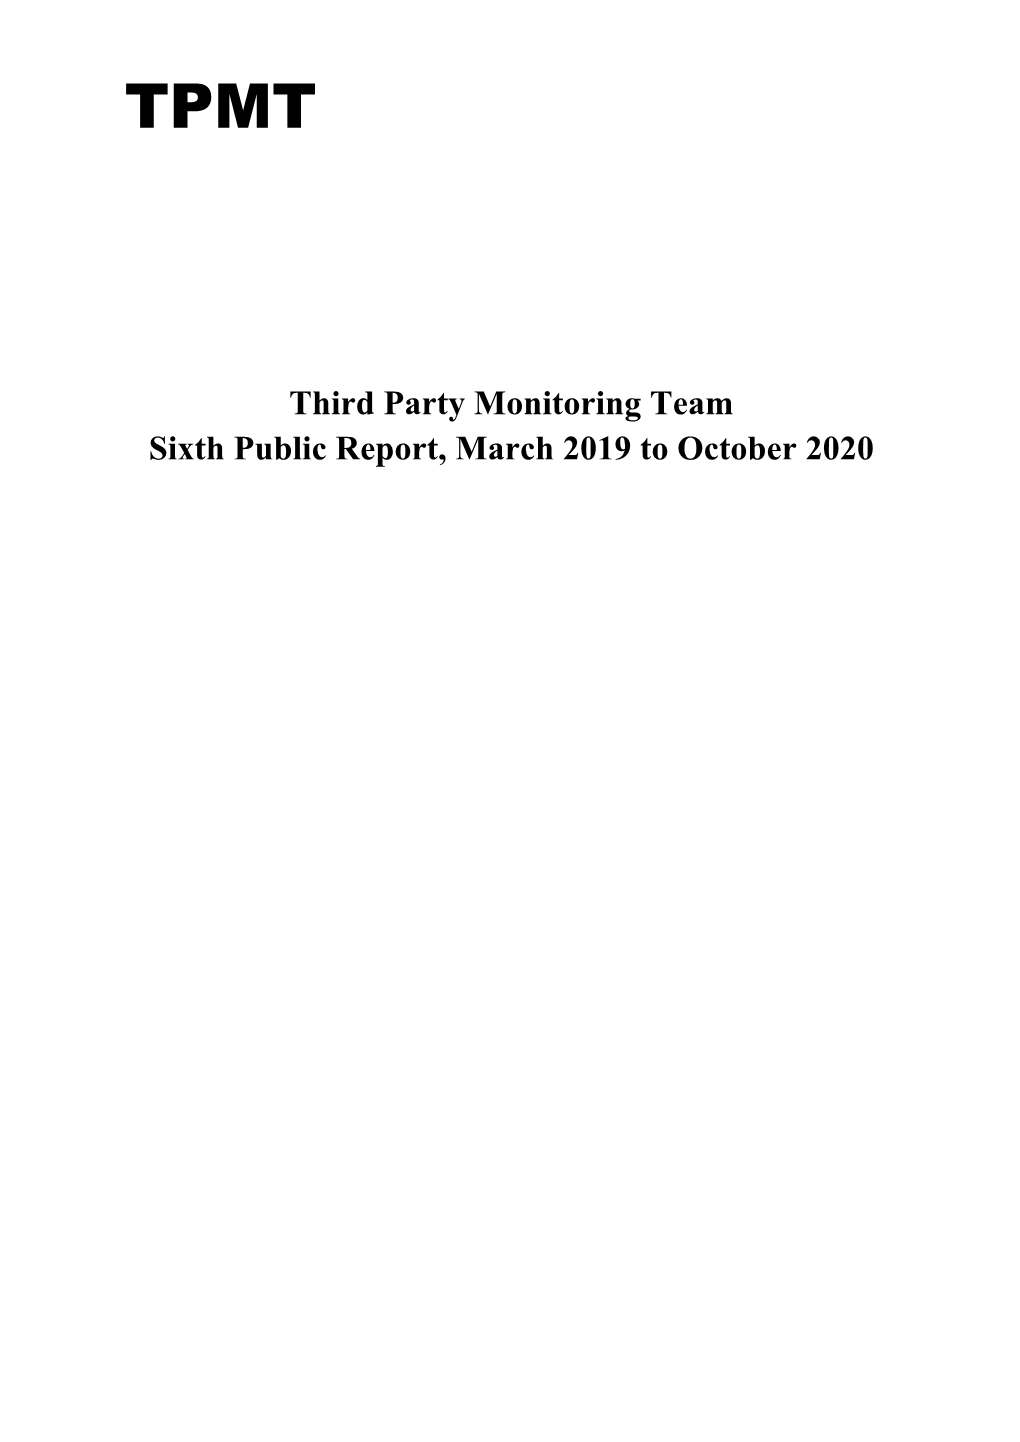 TPMT 6Th Public Report, Mar 2019 to Oct 2020